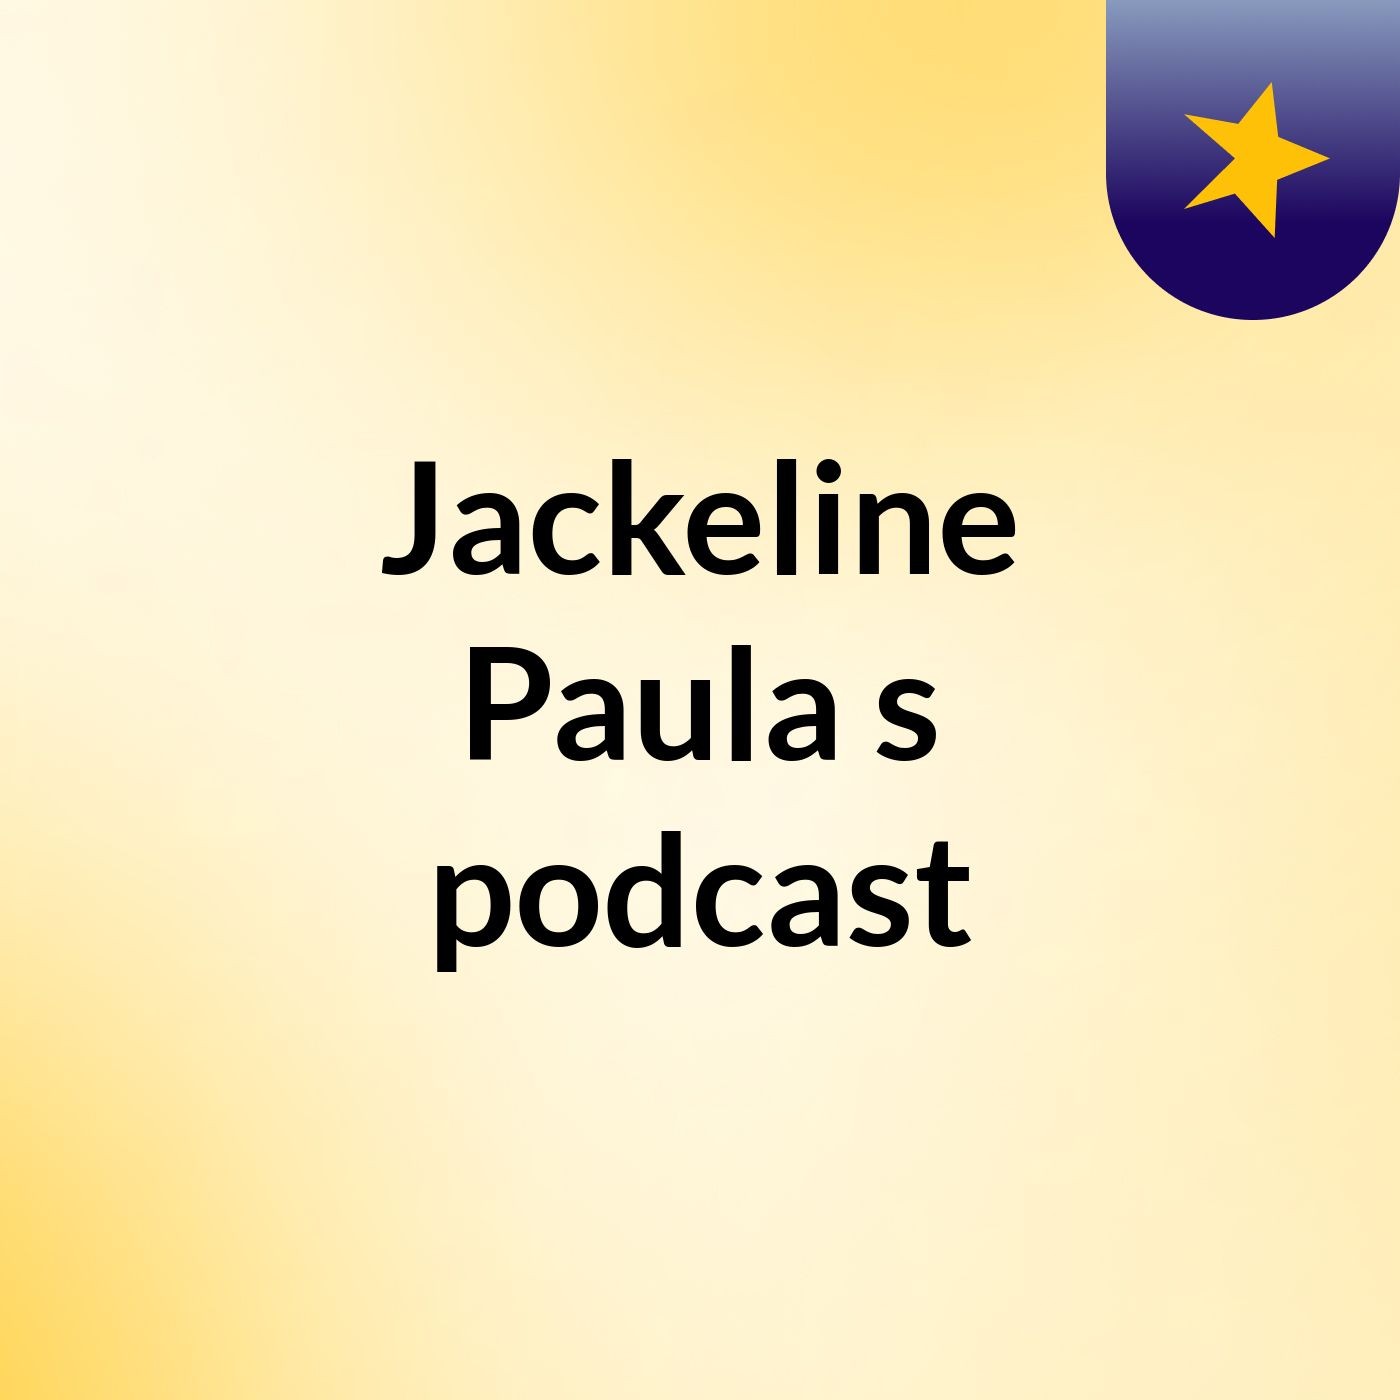 Jackeline Paula's podcast